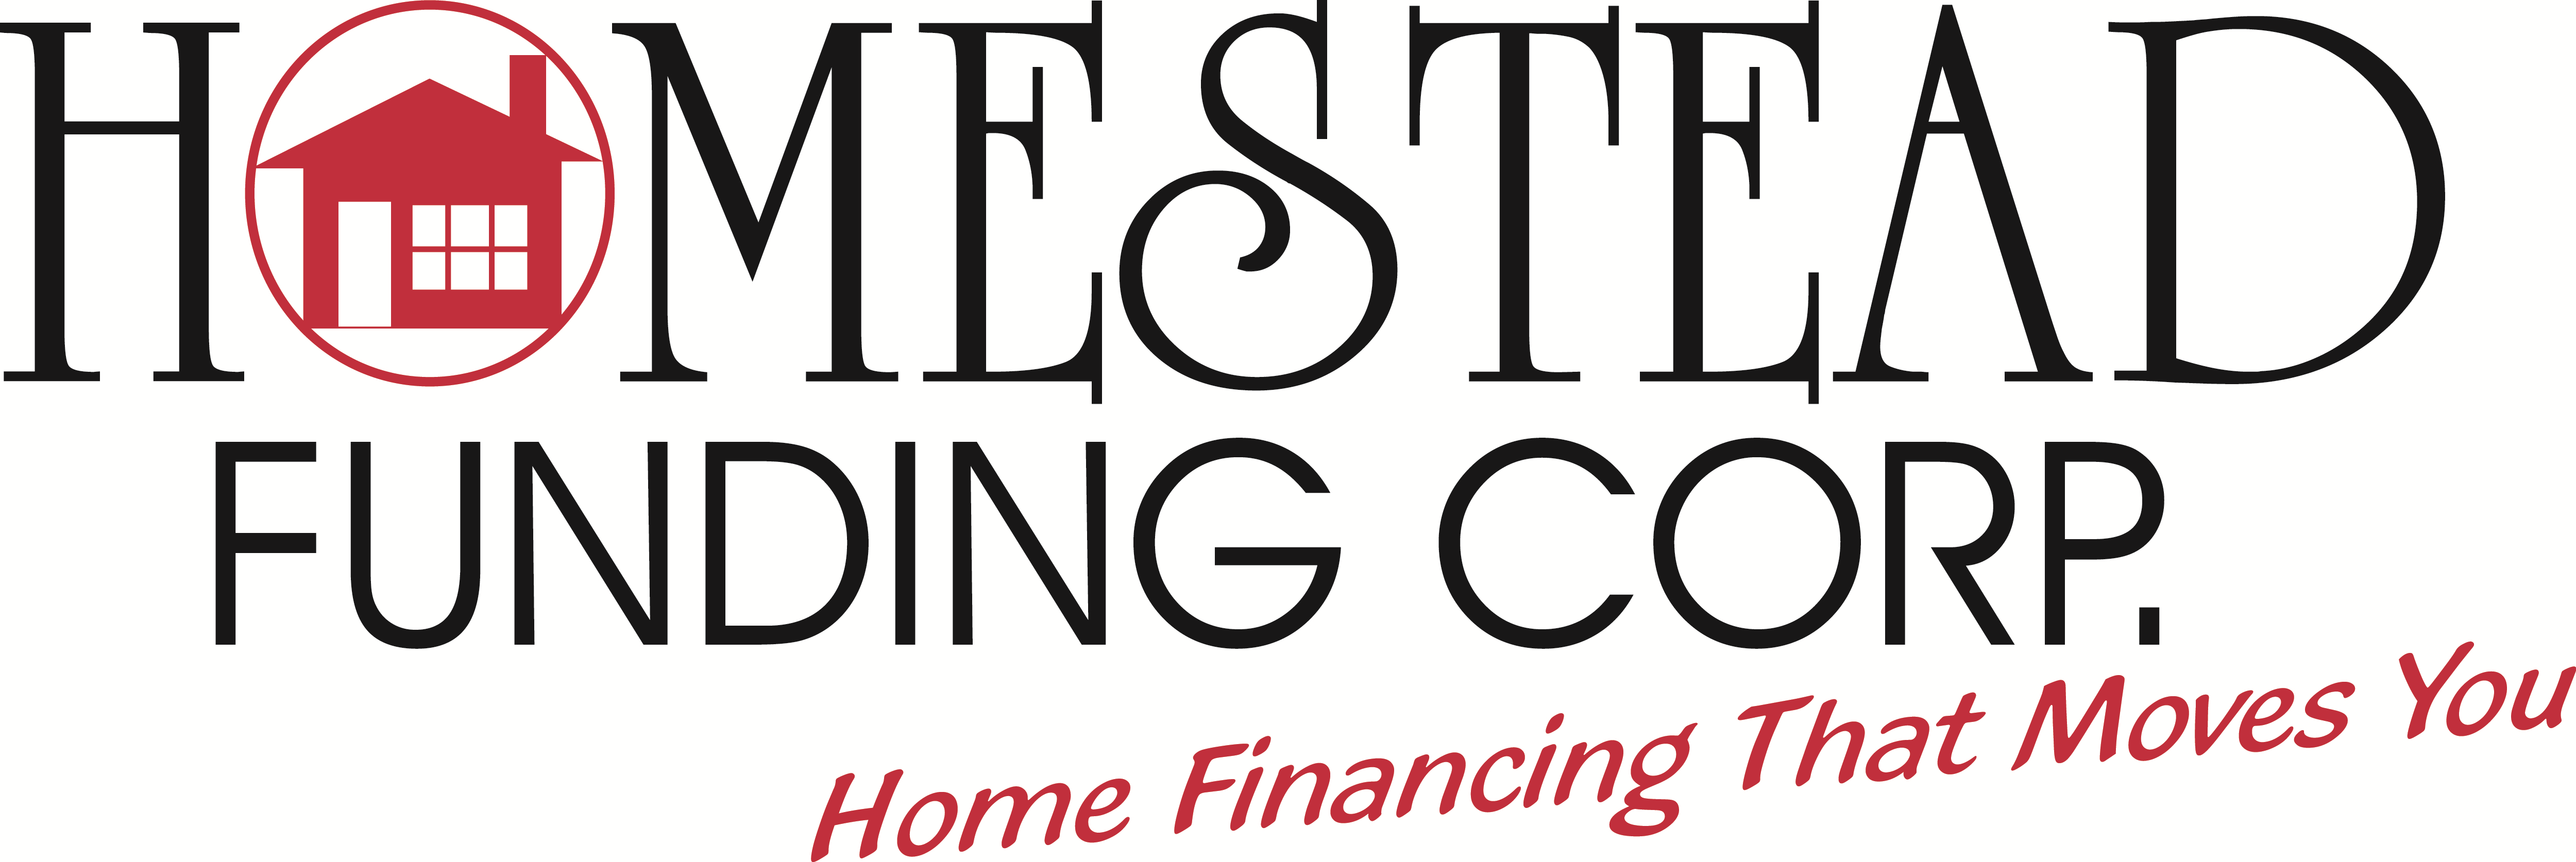 Homestead Funding Corp logo